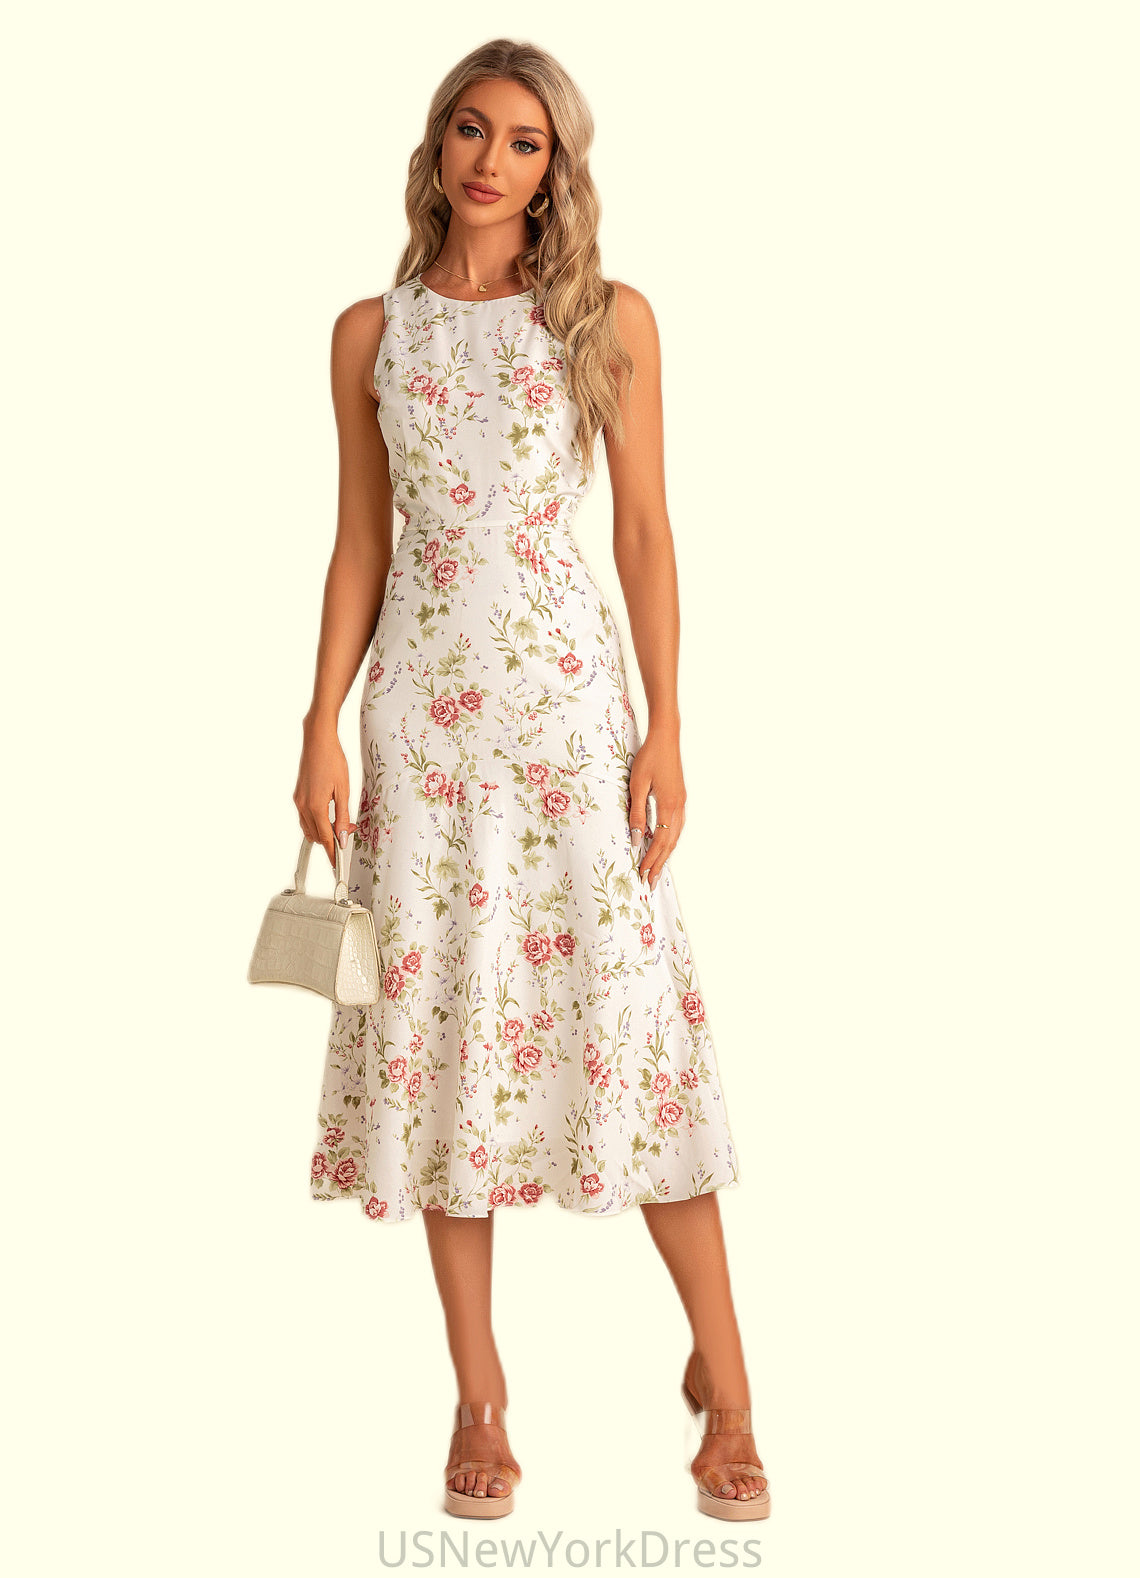 Gladys Trumpet/Mermaid Scoop Tea-Length Polyester Bridesmaid Dress With Floral Print DJP0022566